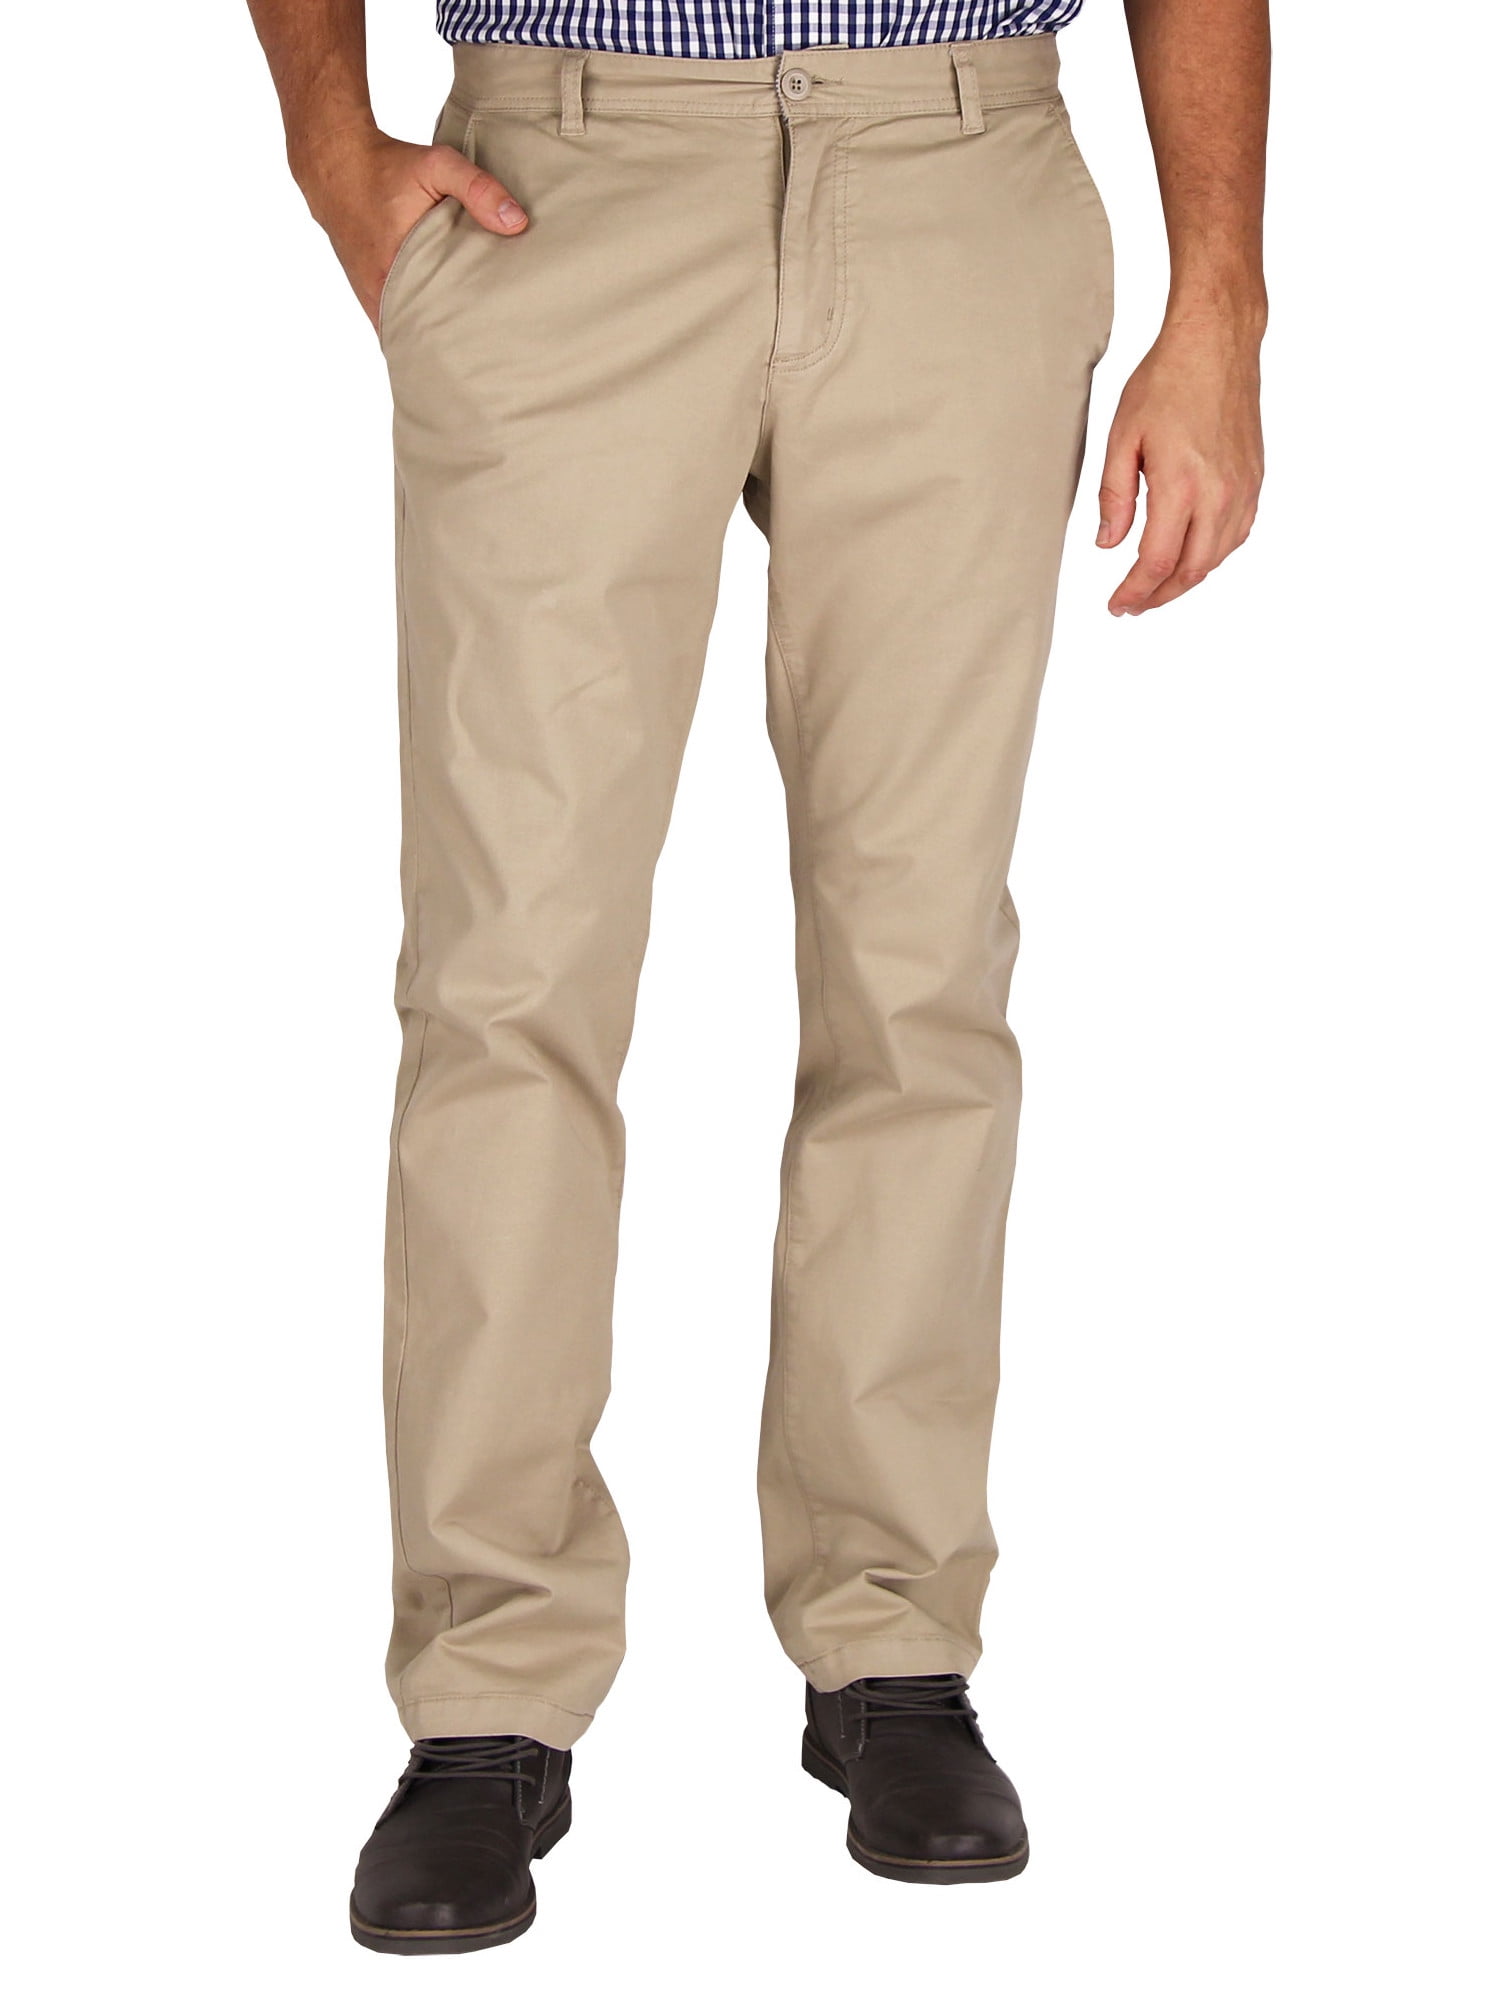 Mens Modern Stretch Fit Flat Front Casual Pants (Light Khaki, Size 40W x  34L)